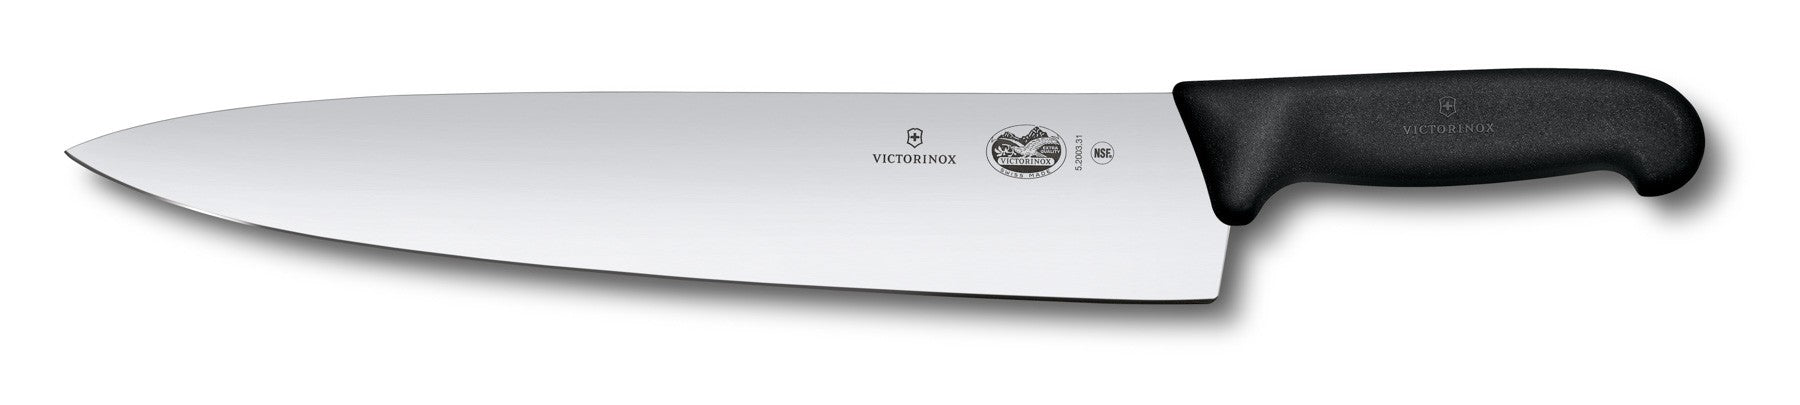 Victorinox 10" Fibrox Pro Chef's Knife - 40521, 47521